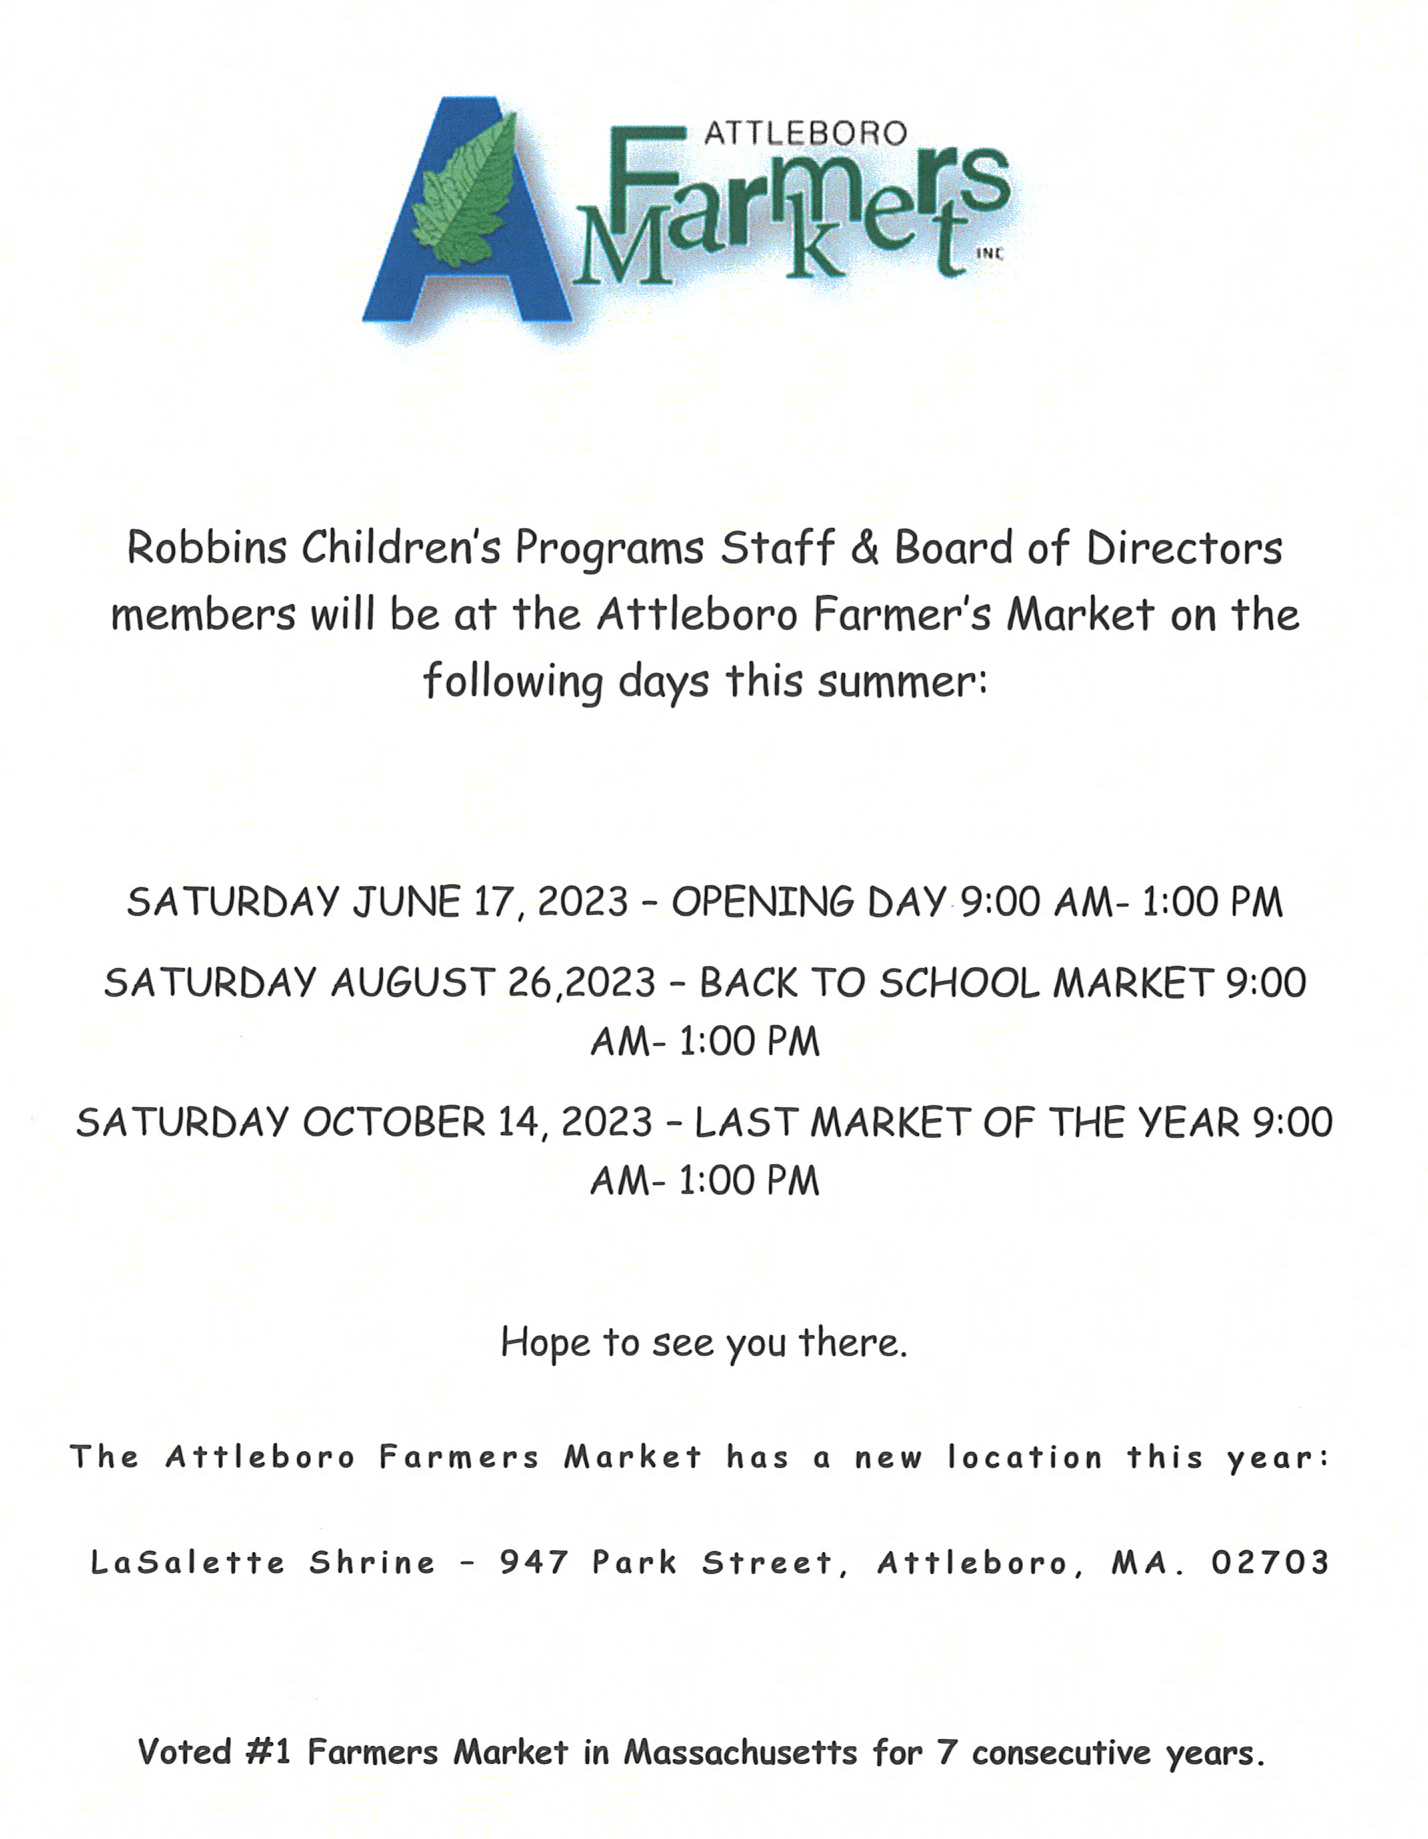 Attleboro Farmers Market Multiple Dates Robbins Children's Programs